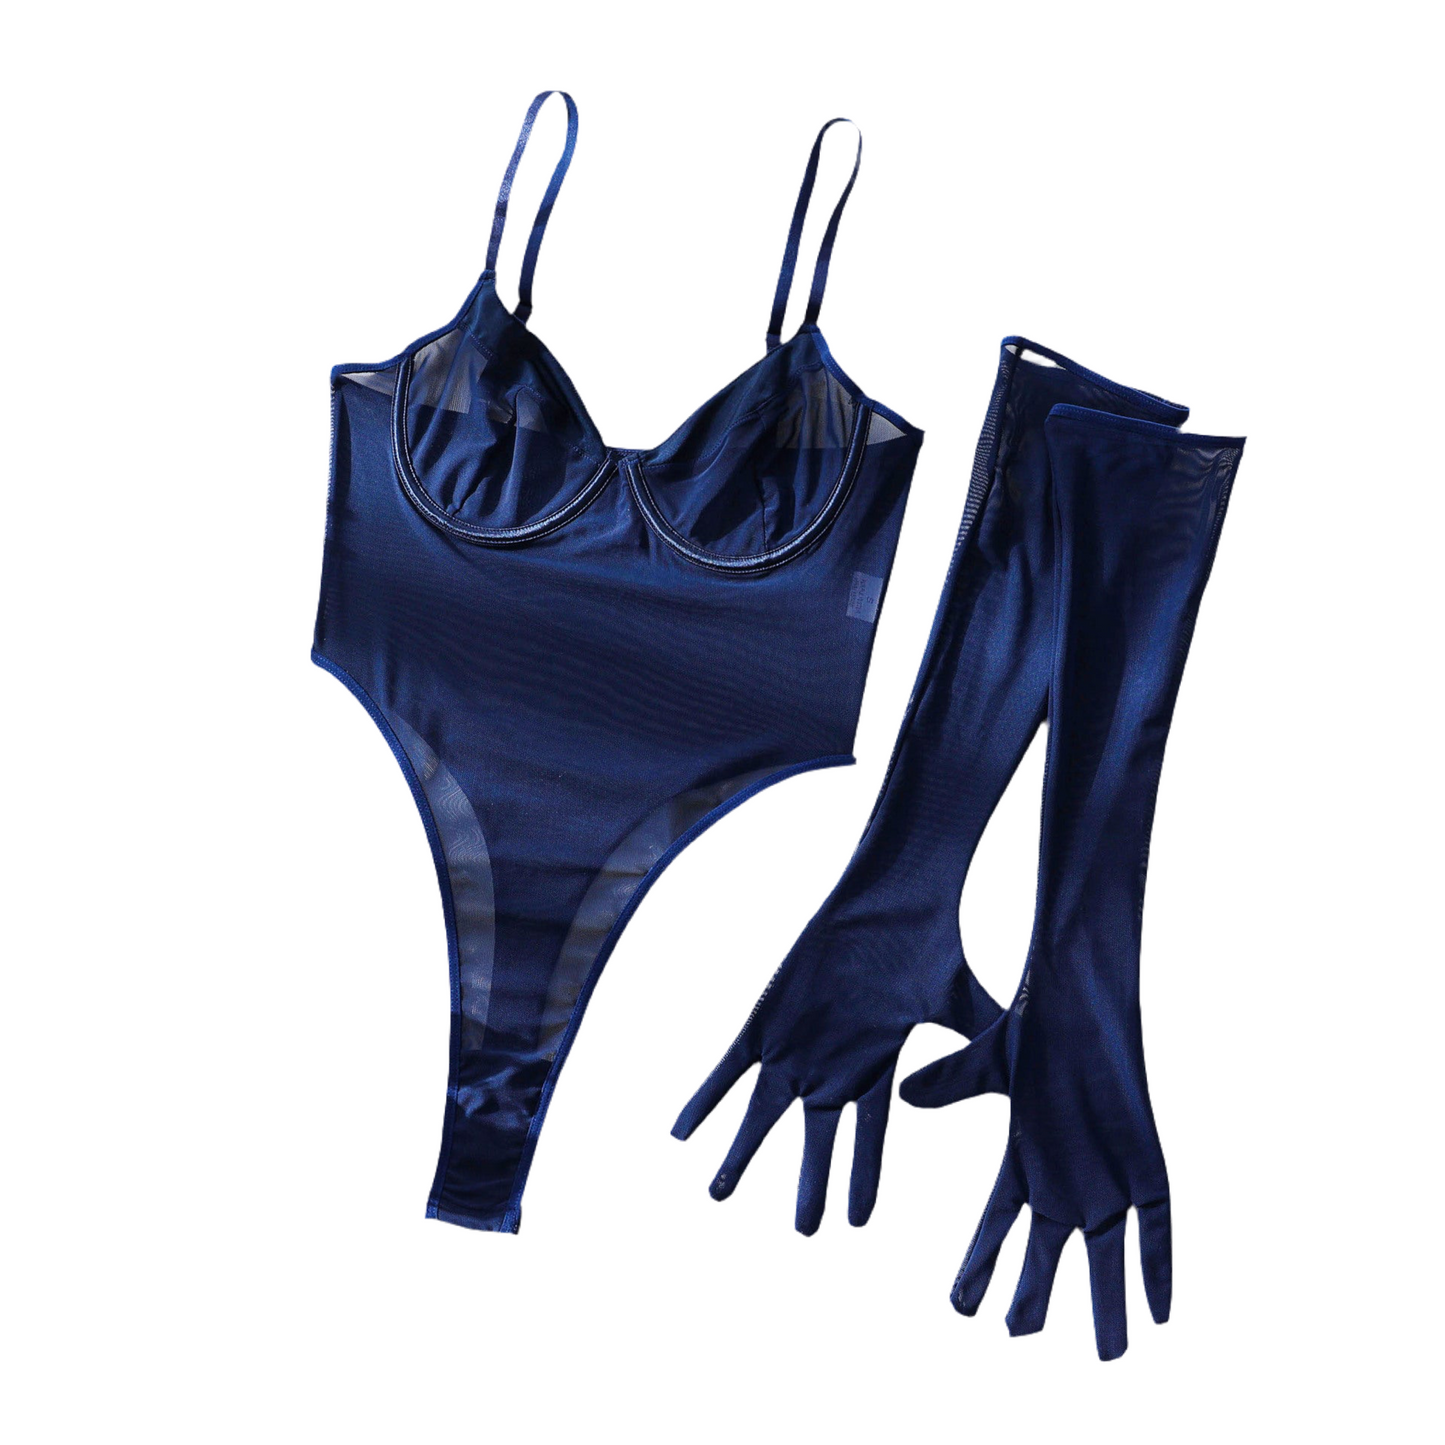 Bodysuit and Glove Lingerie Set